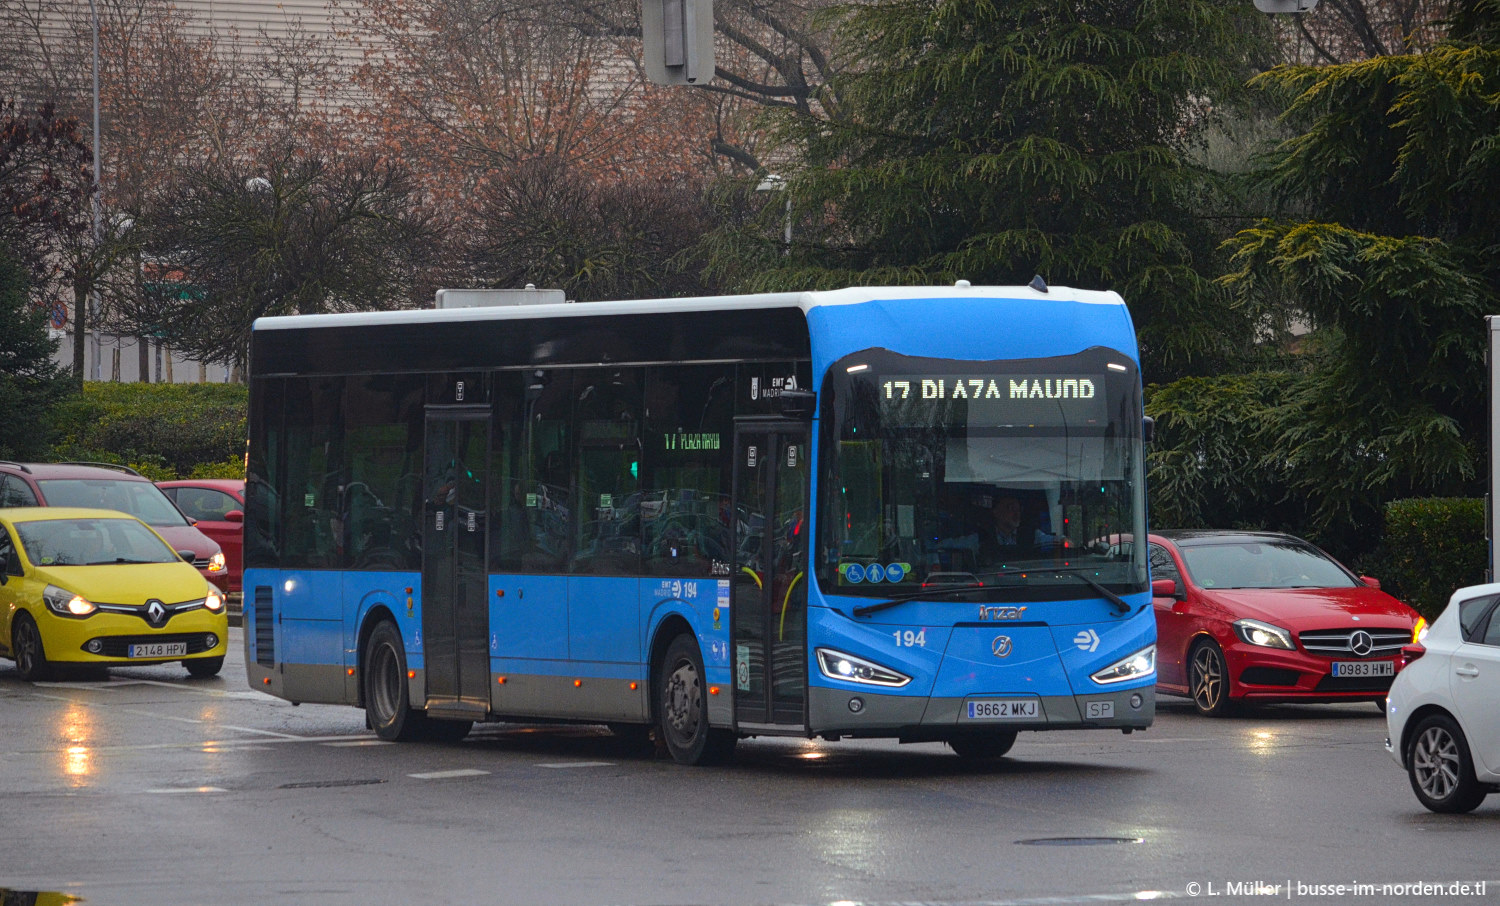 Spanyolország, Irizar ie bus 12m sz.: 194